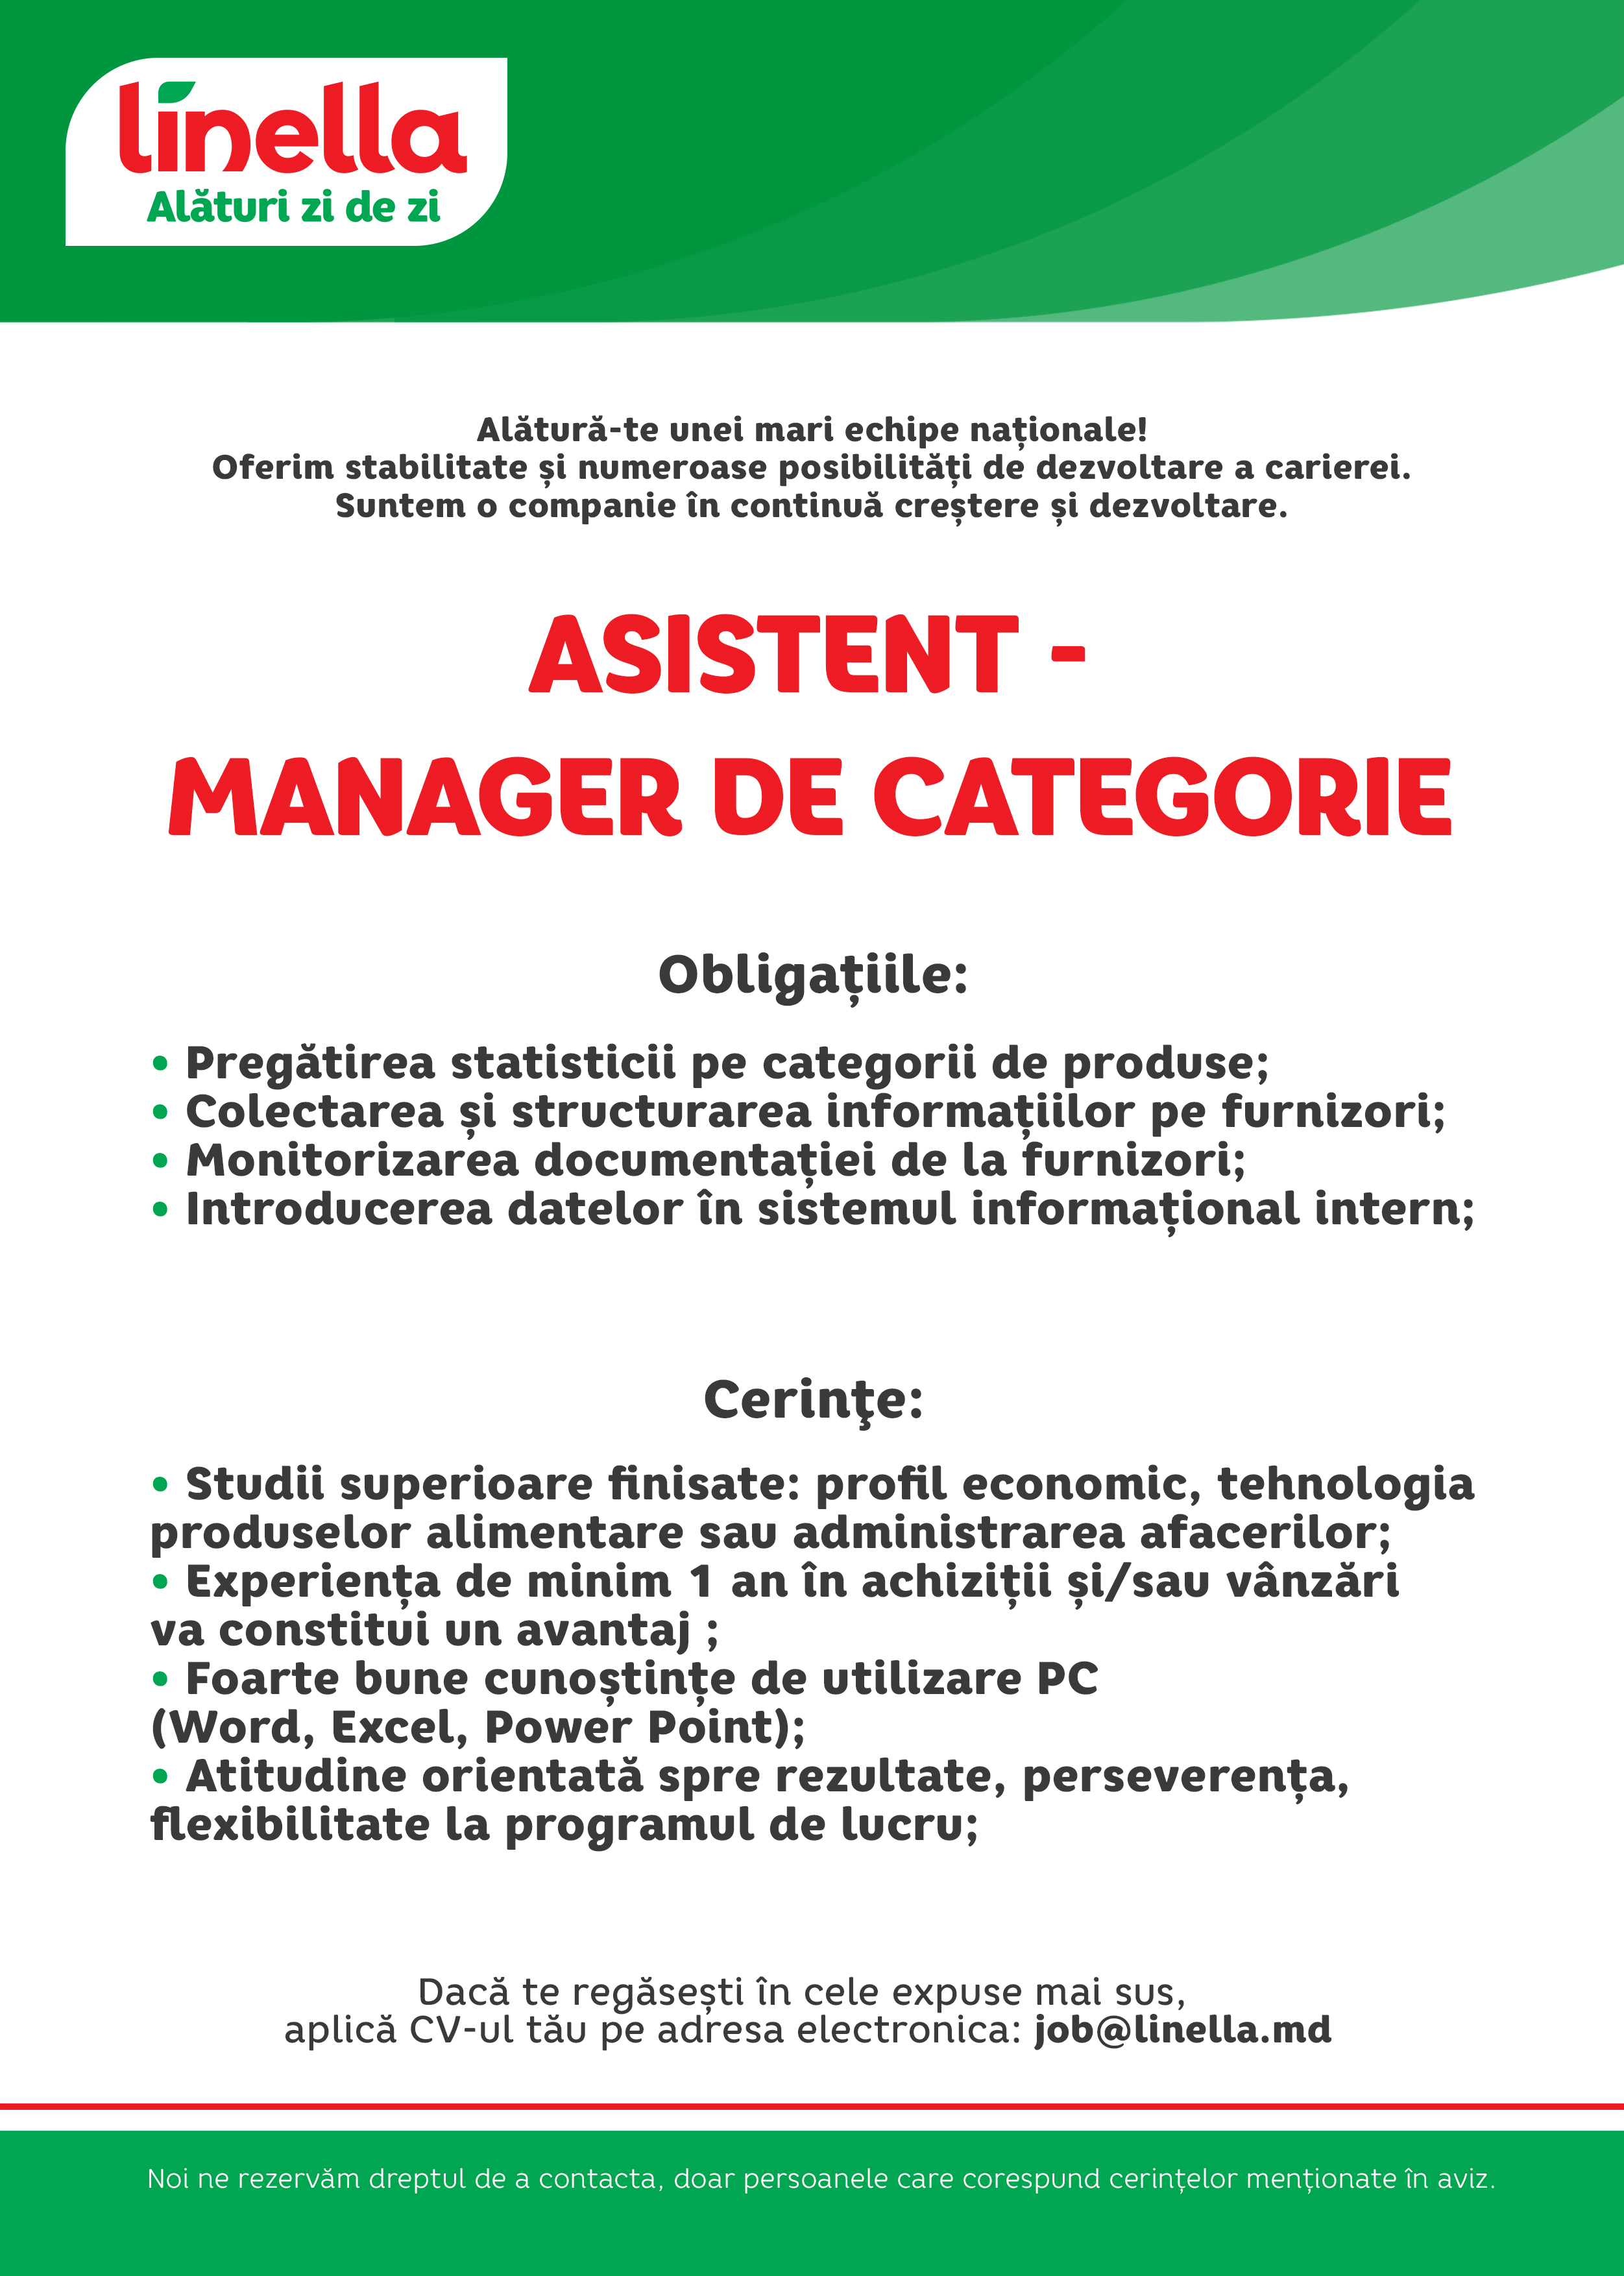 Asistent Manager de Categorie